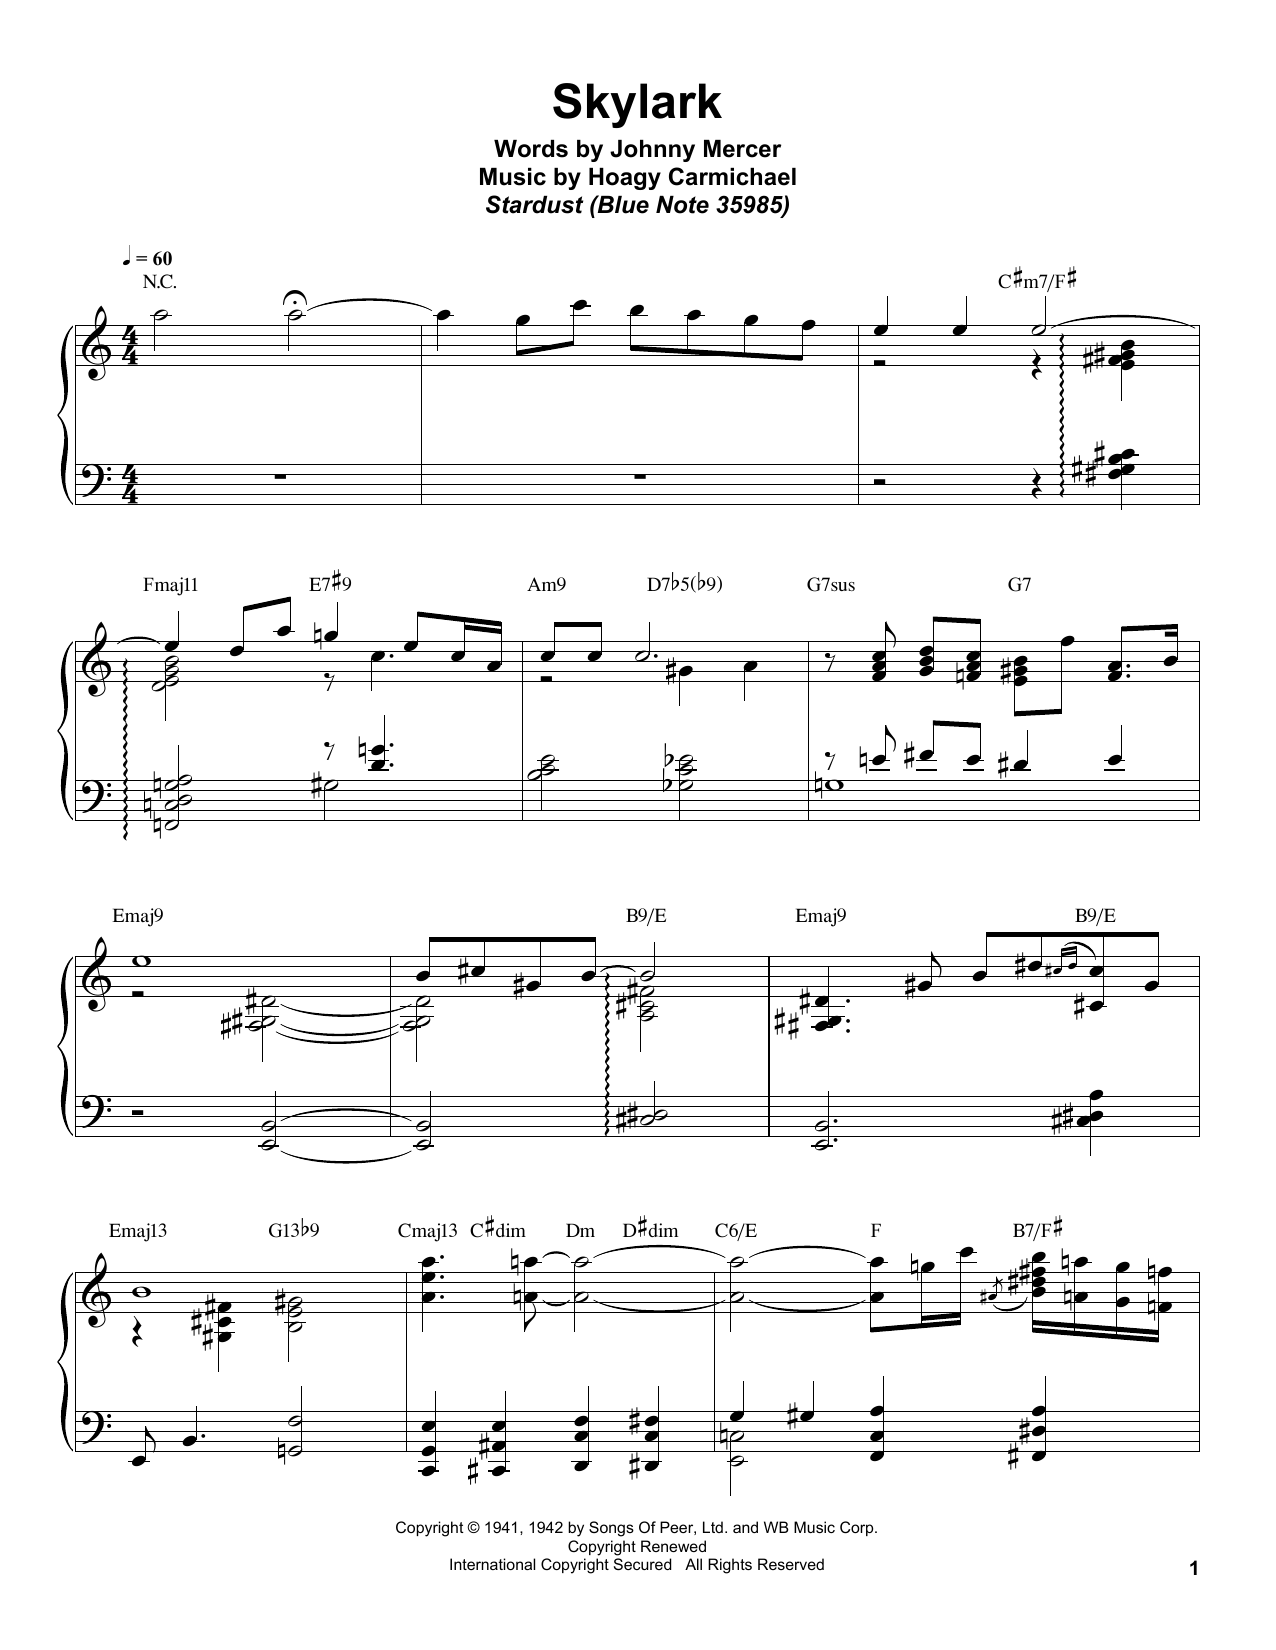 Bill Charlap Skylark Sheet Music Notes & Chords for Piano Transcription - Download or Print PDF